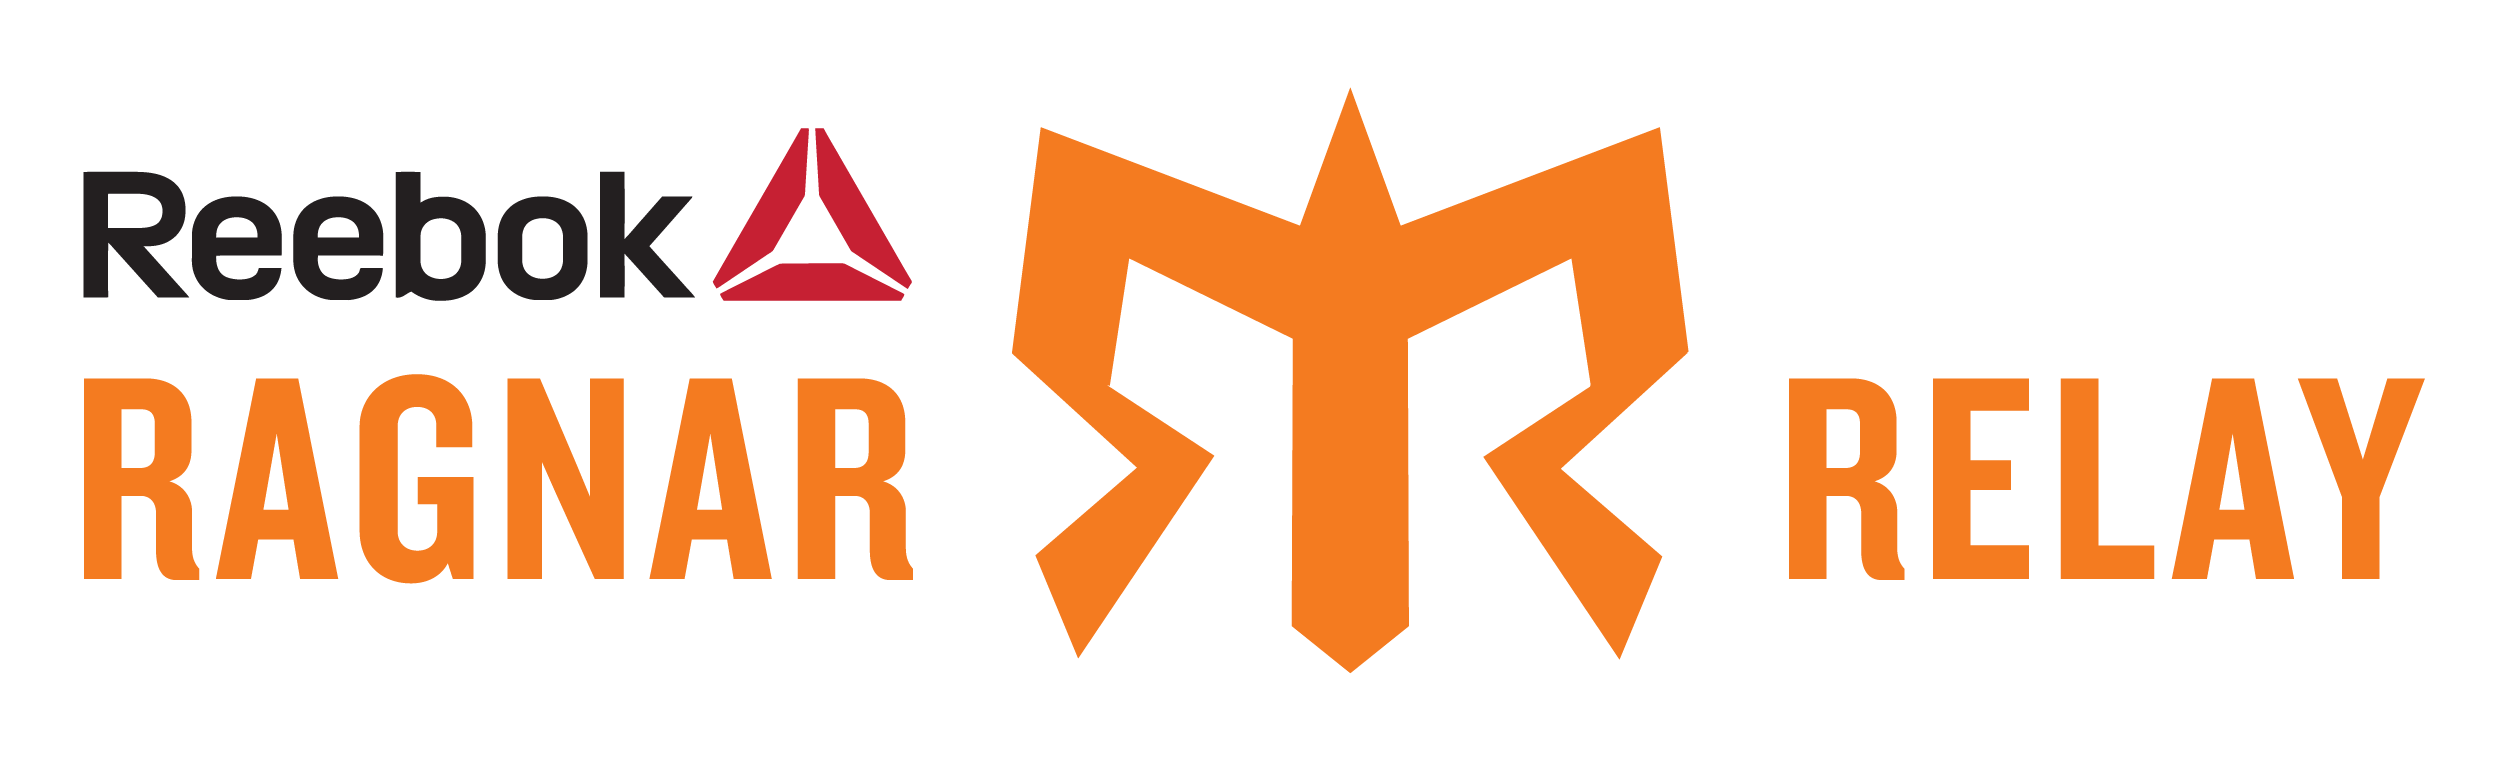 Reebok Ragnar Logo Standard Horizontal Salt Lake City Track Club